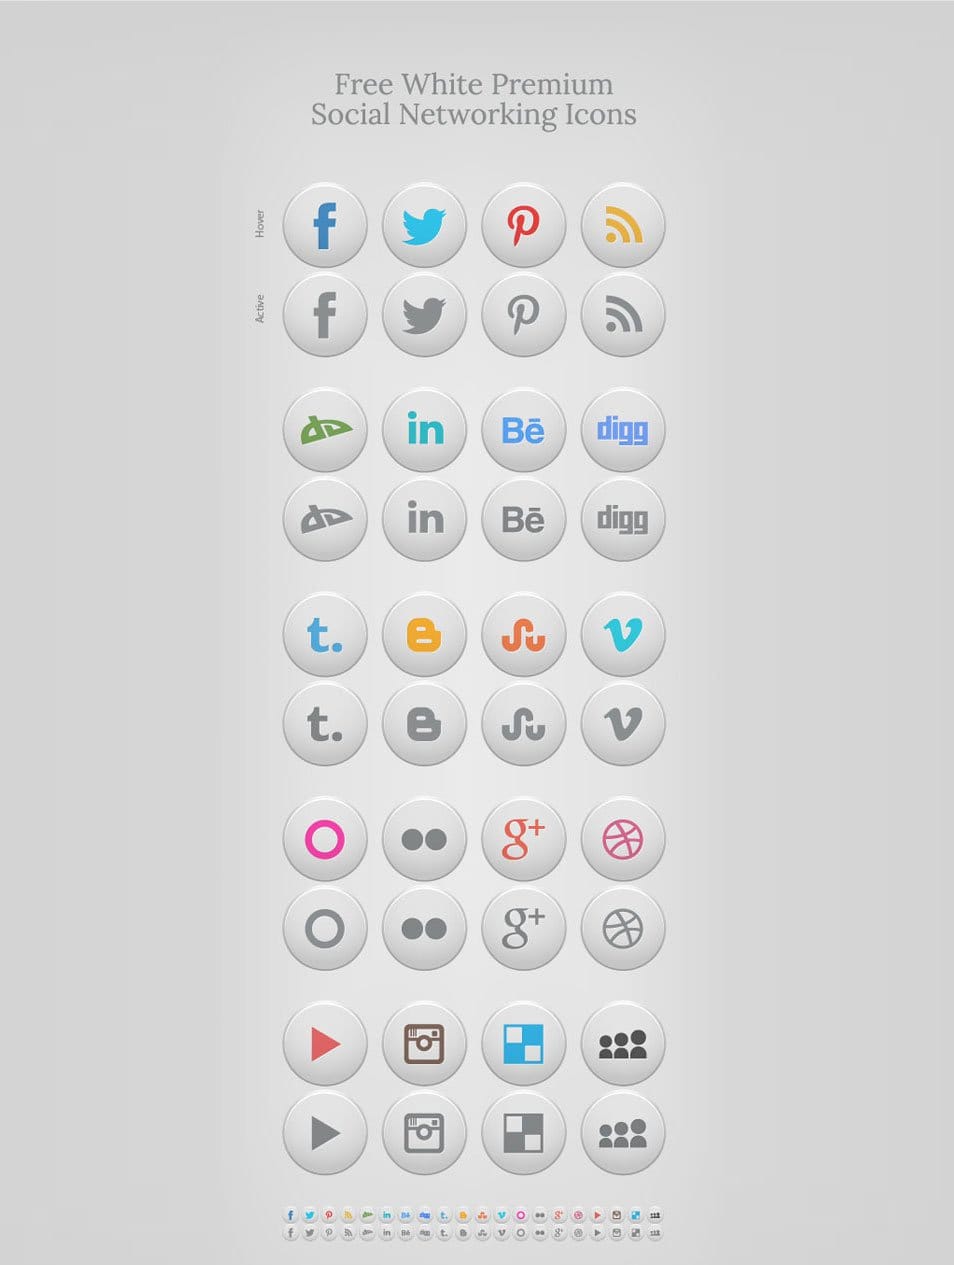 Free White Premium Social Networking Icons